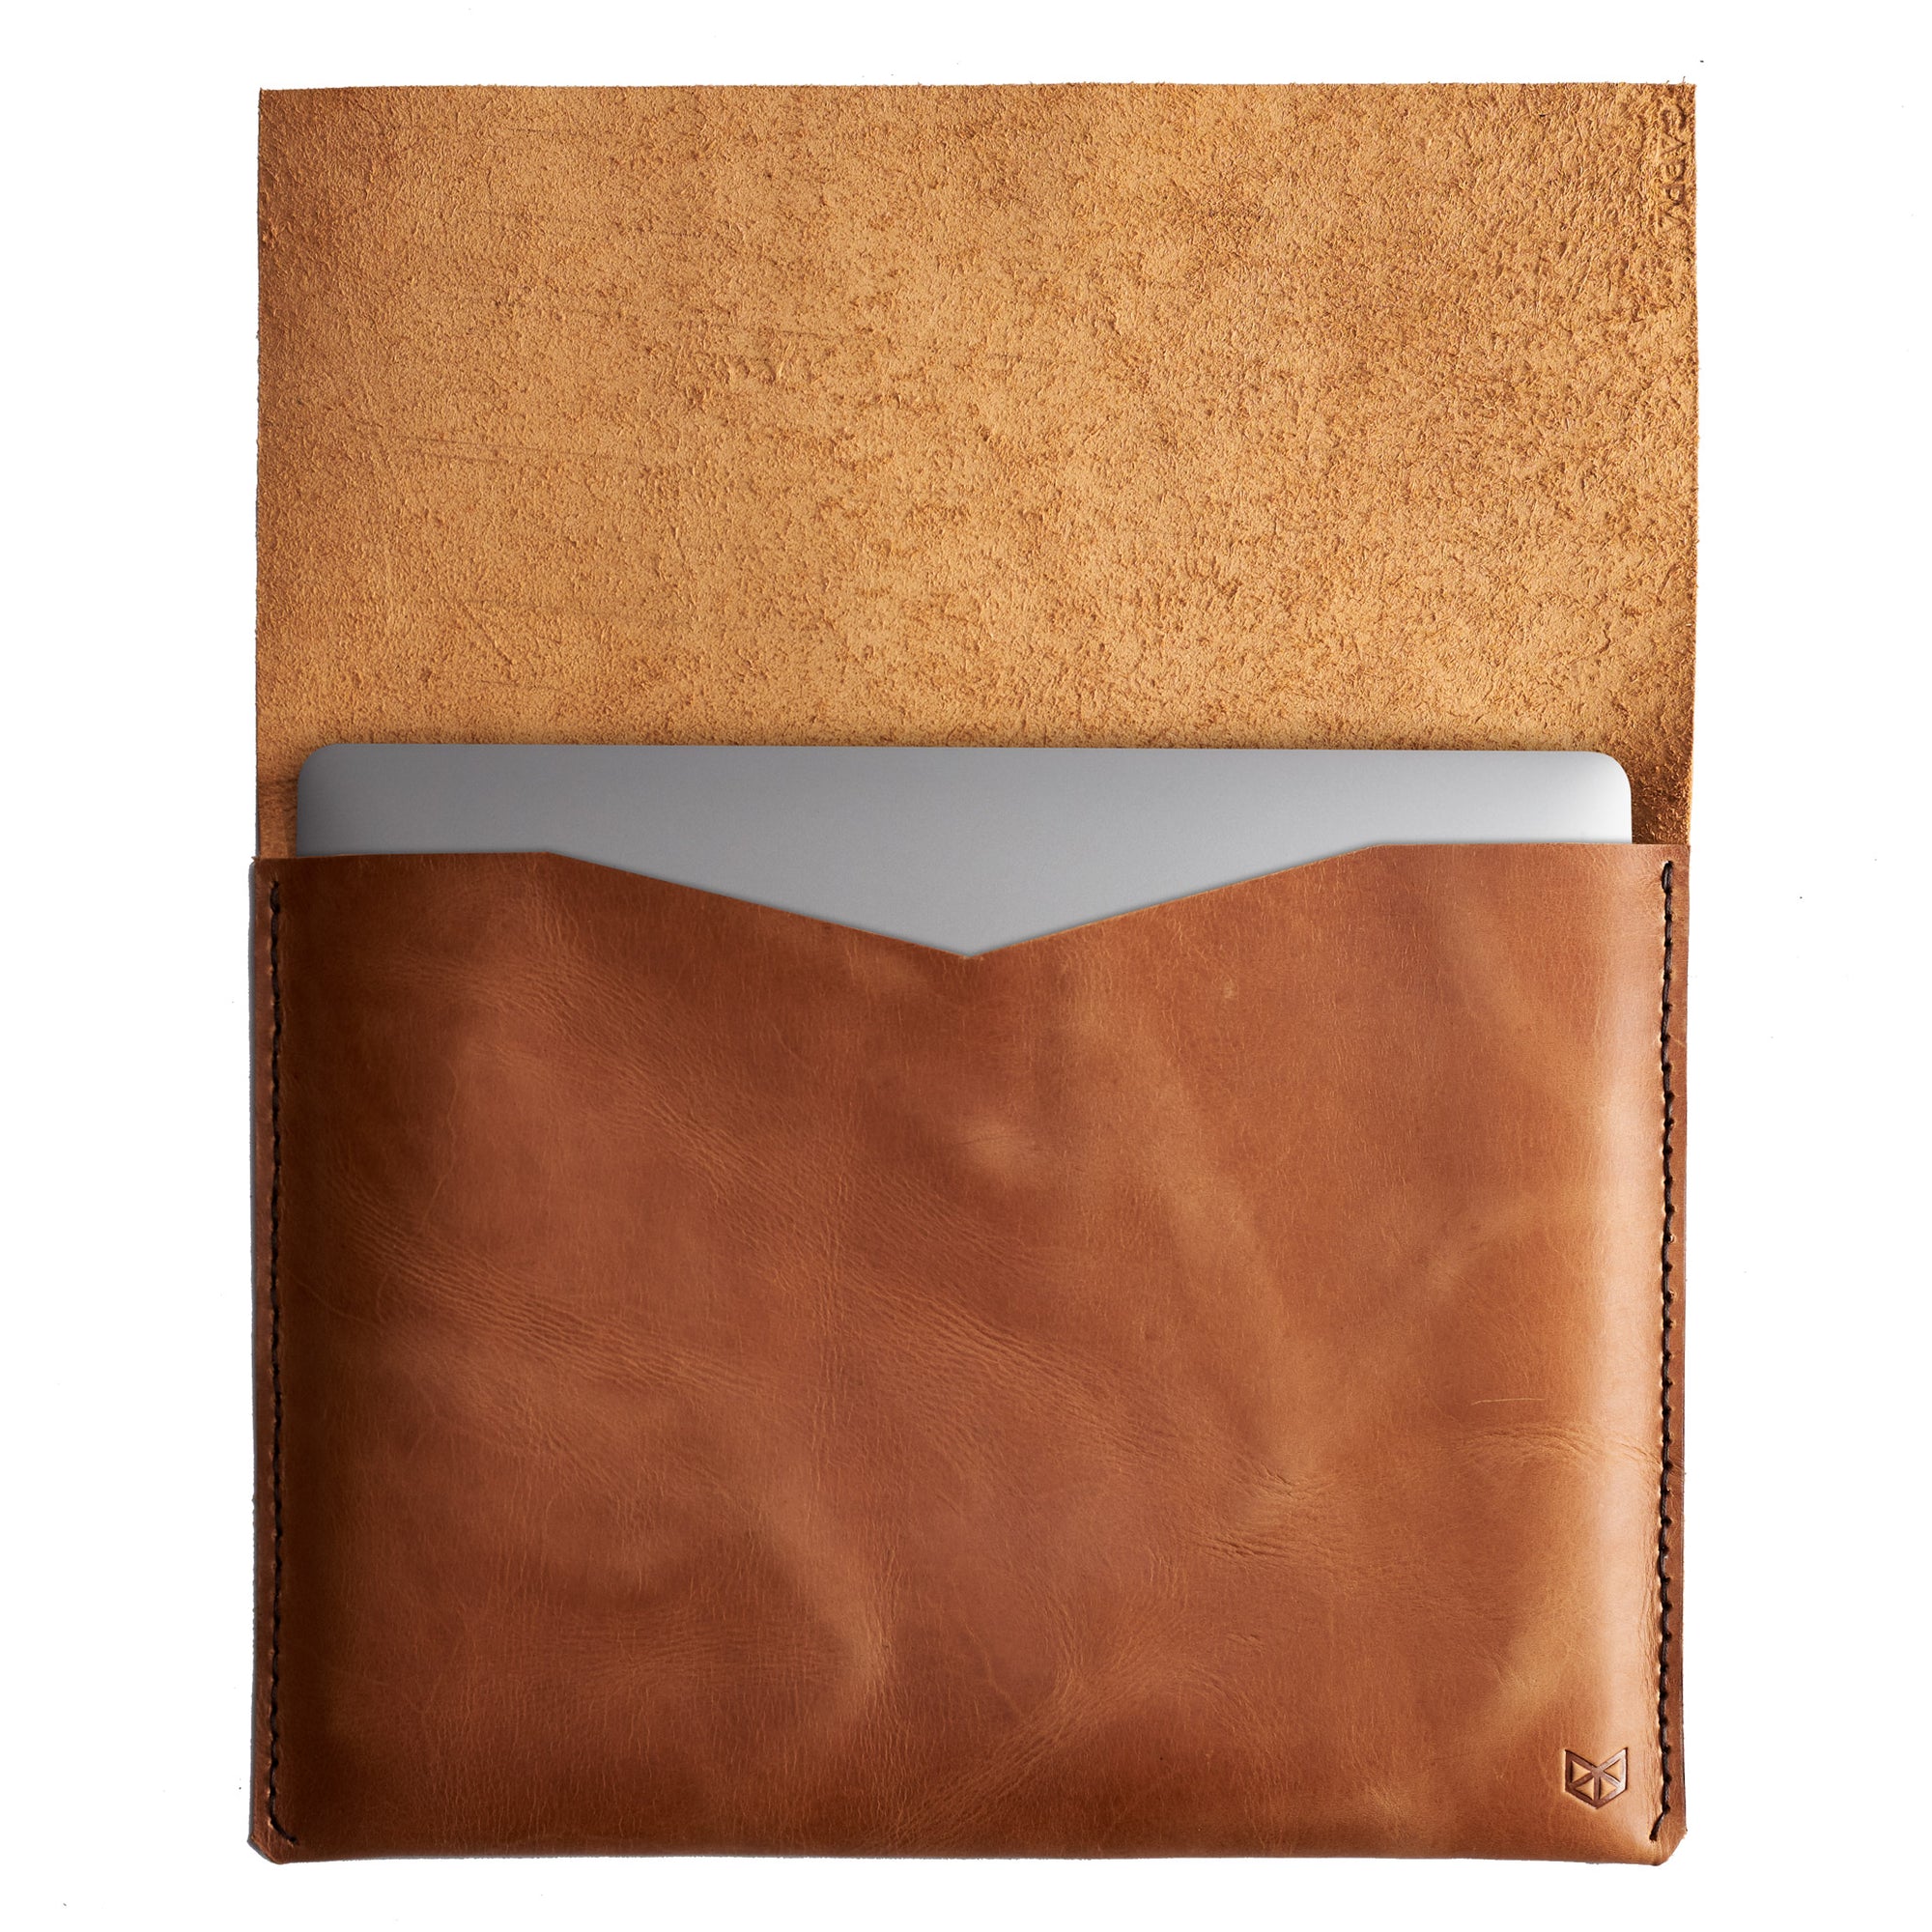 Soft interior case. Leather Lenovo Yoga Sleeve Case by Capra Leather